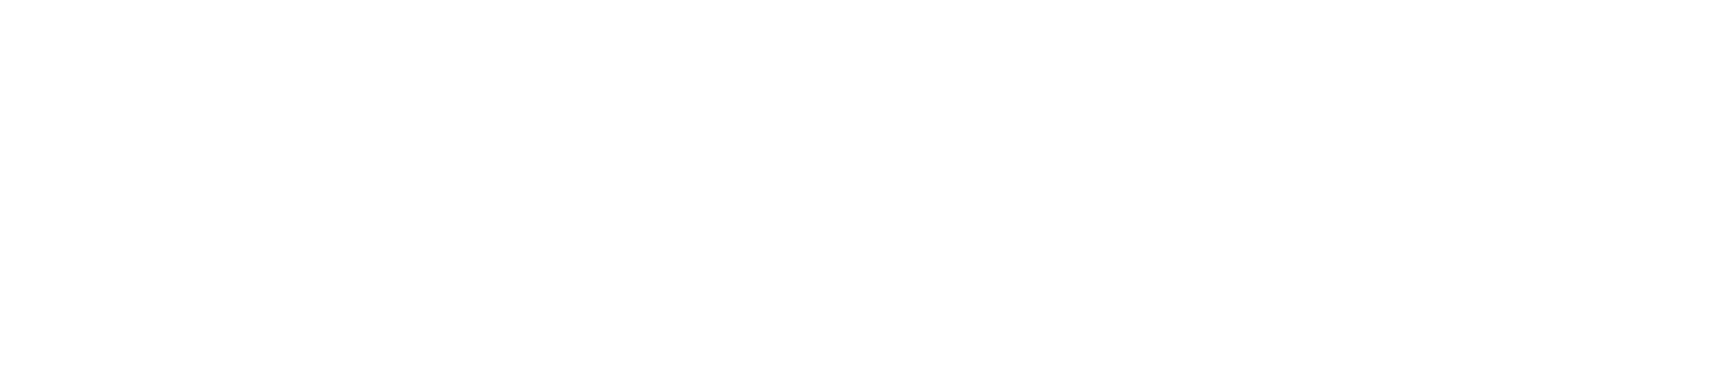 Antioch Church Network